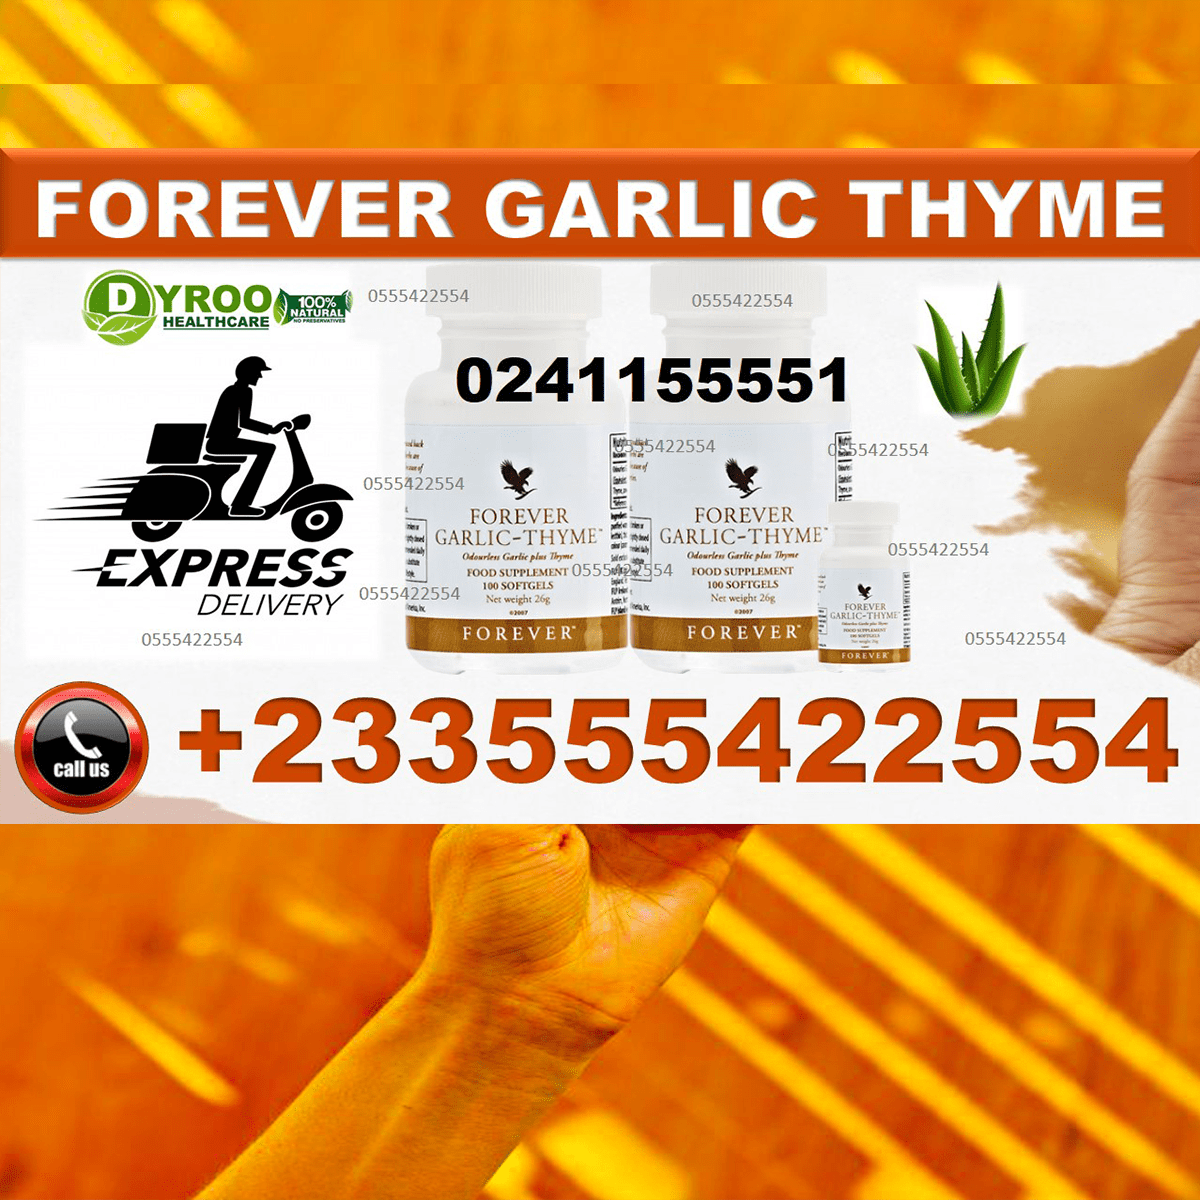 Garlic Thyme Product